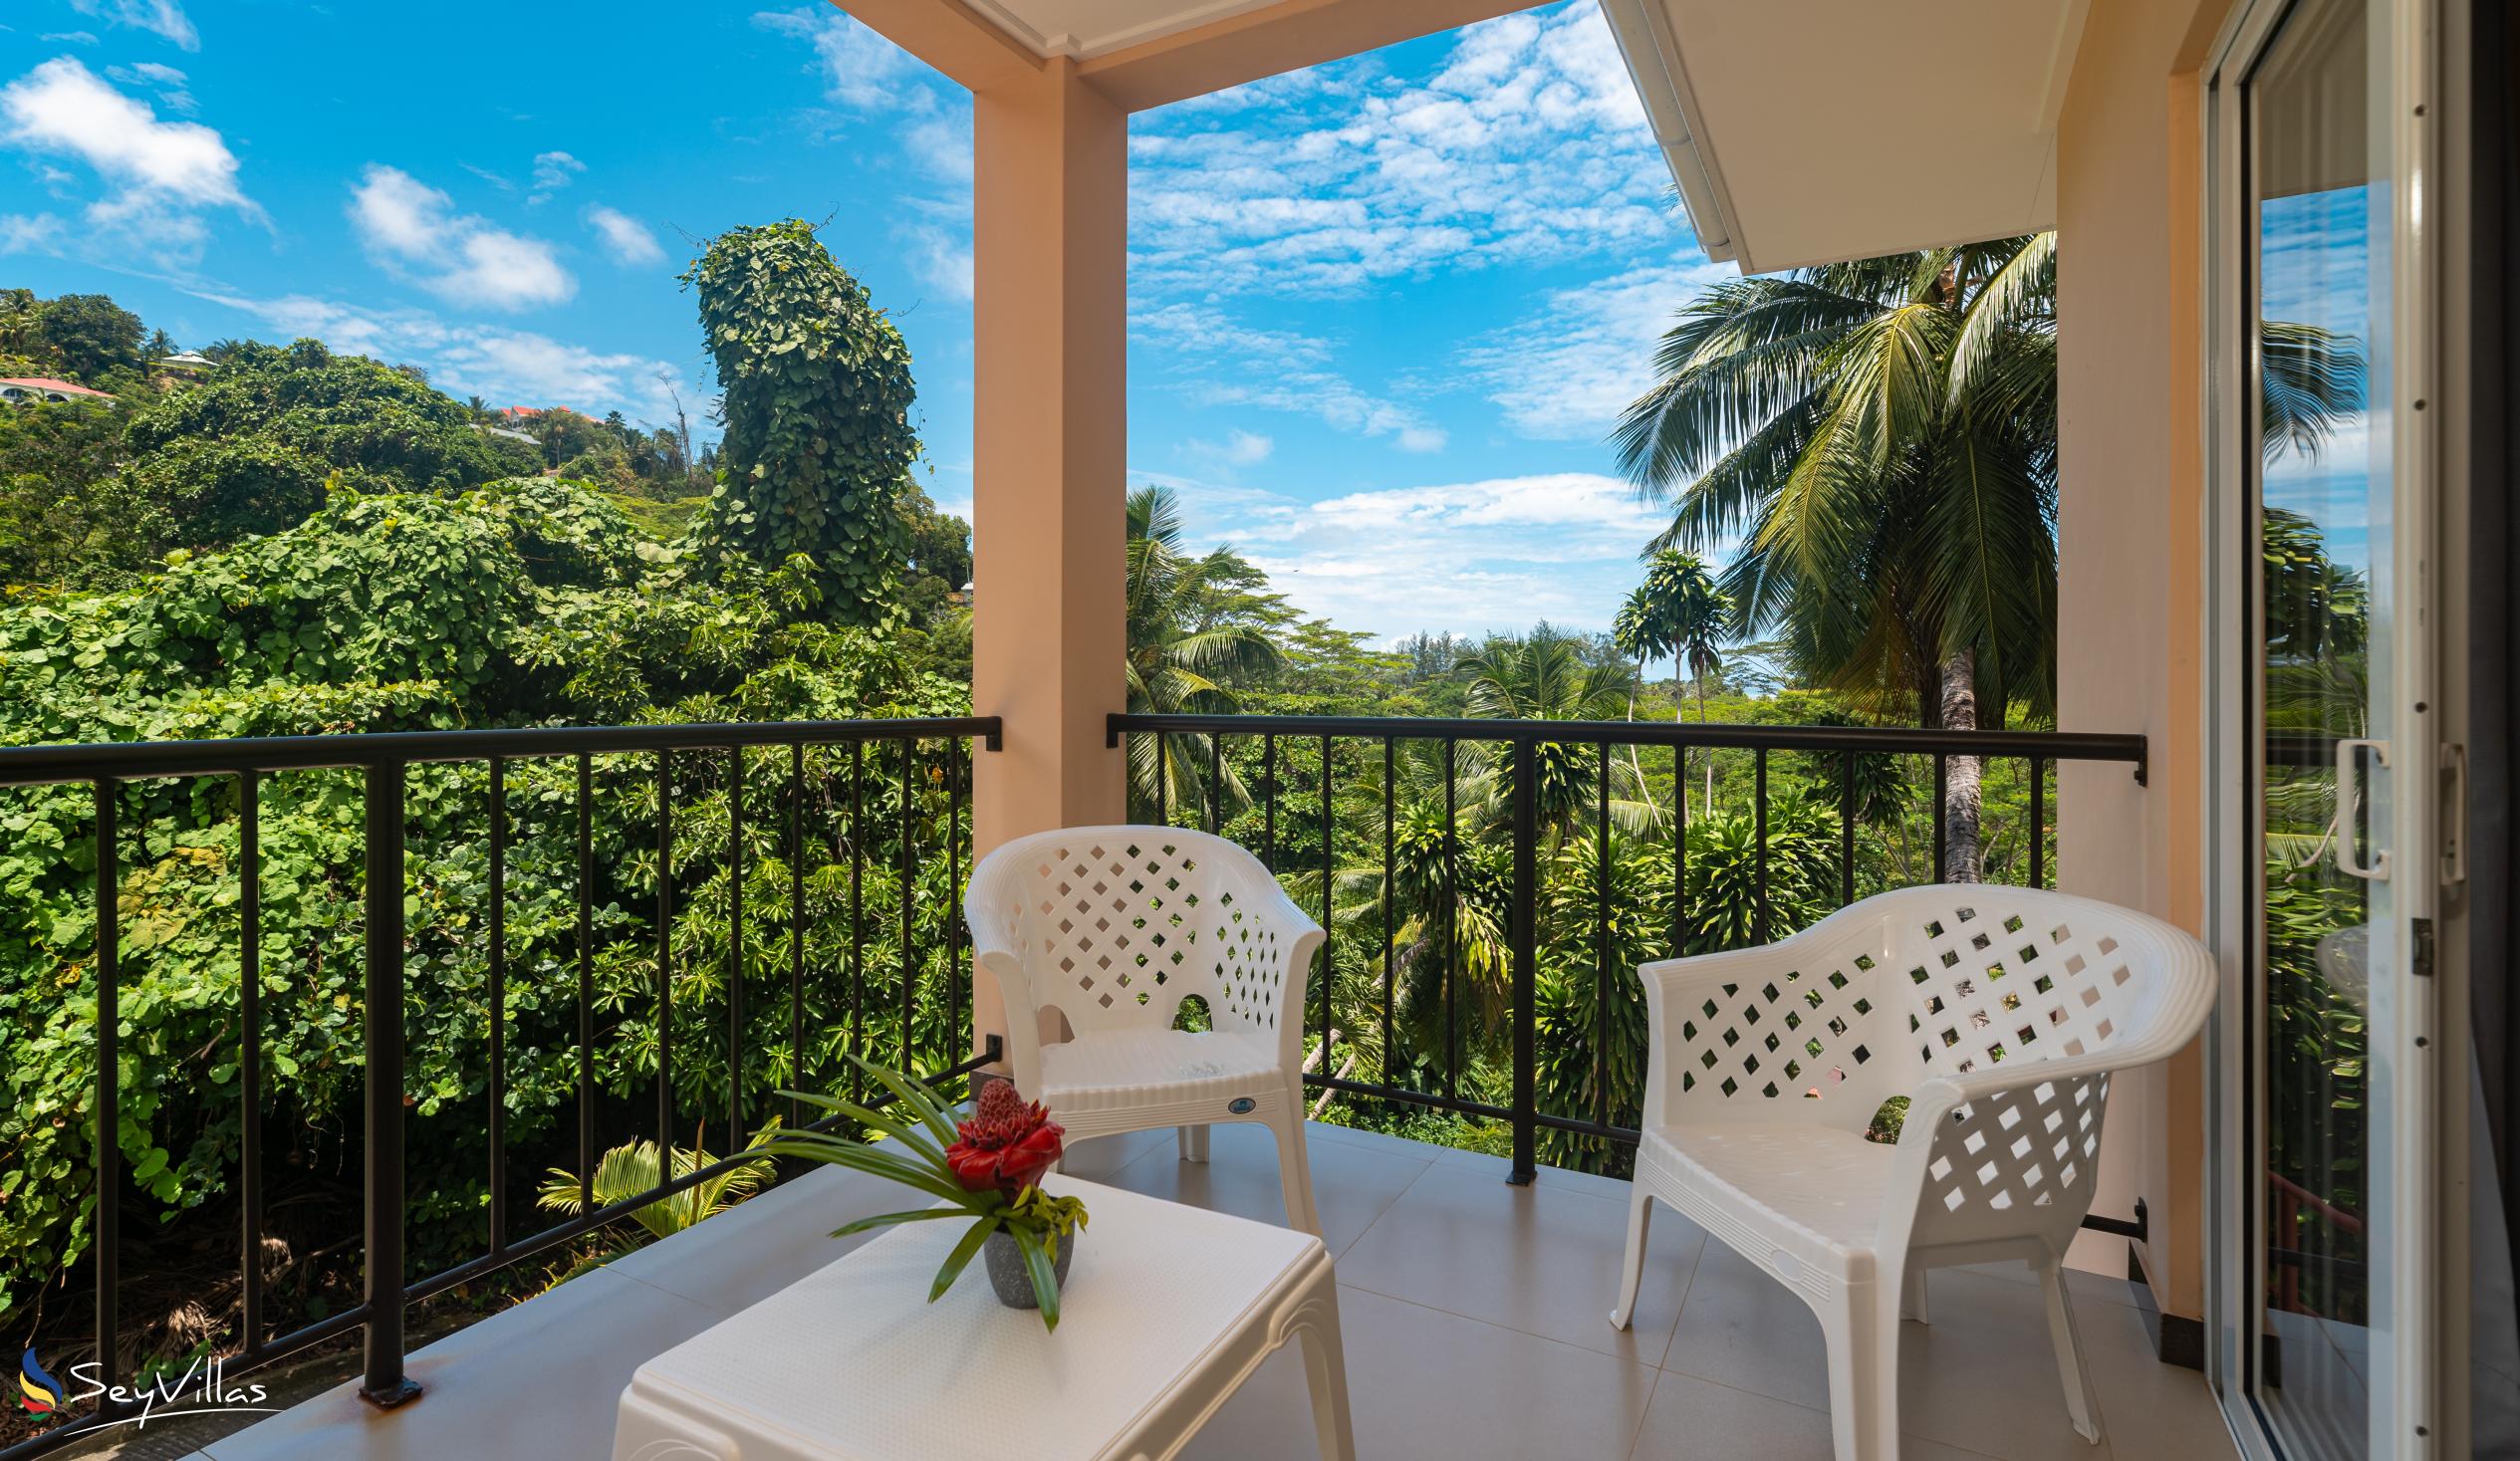 Foto 38: JAIDSS Holiday Apartments - Appartamento con 2 camere - Mahé (Seychelles)